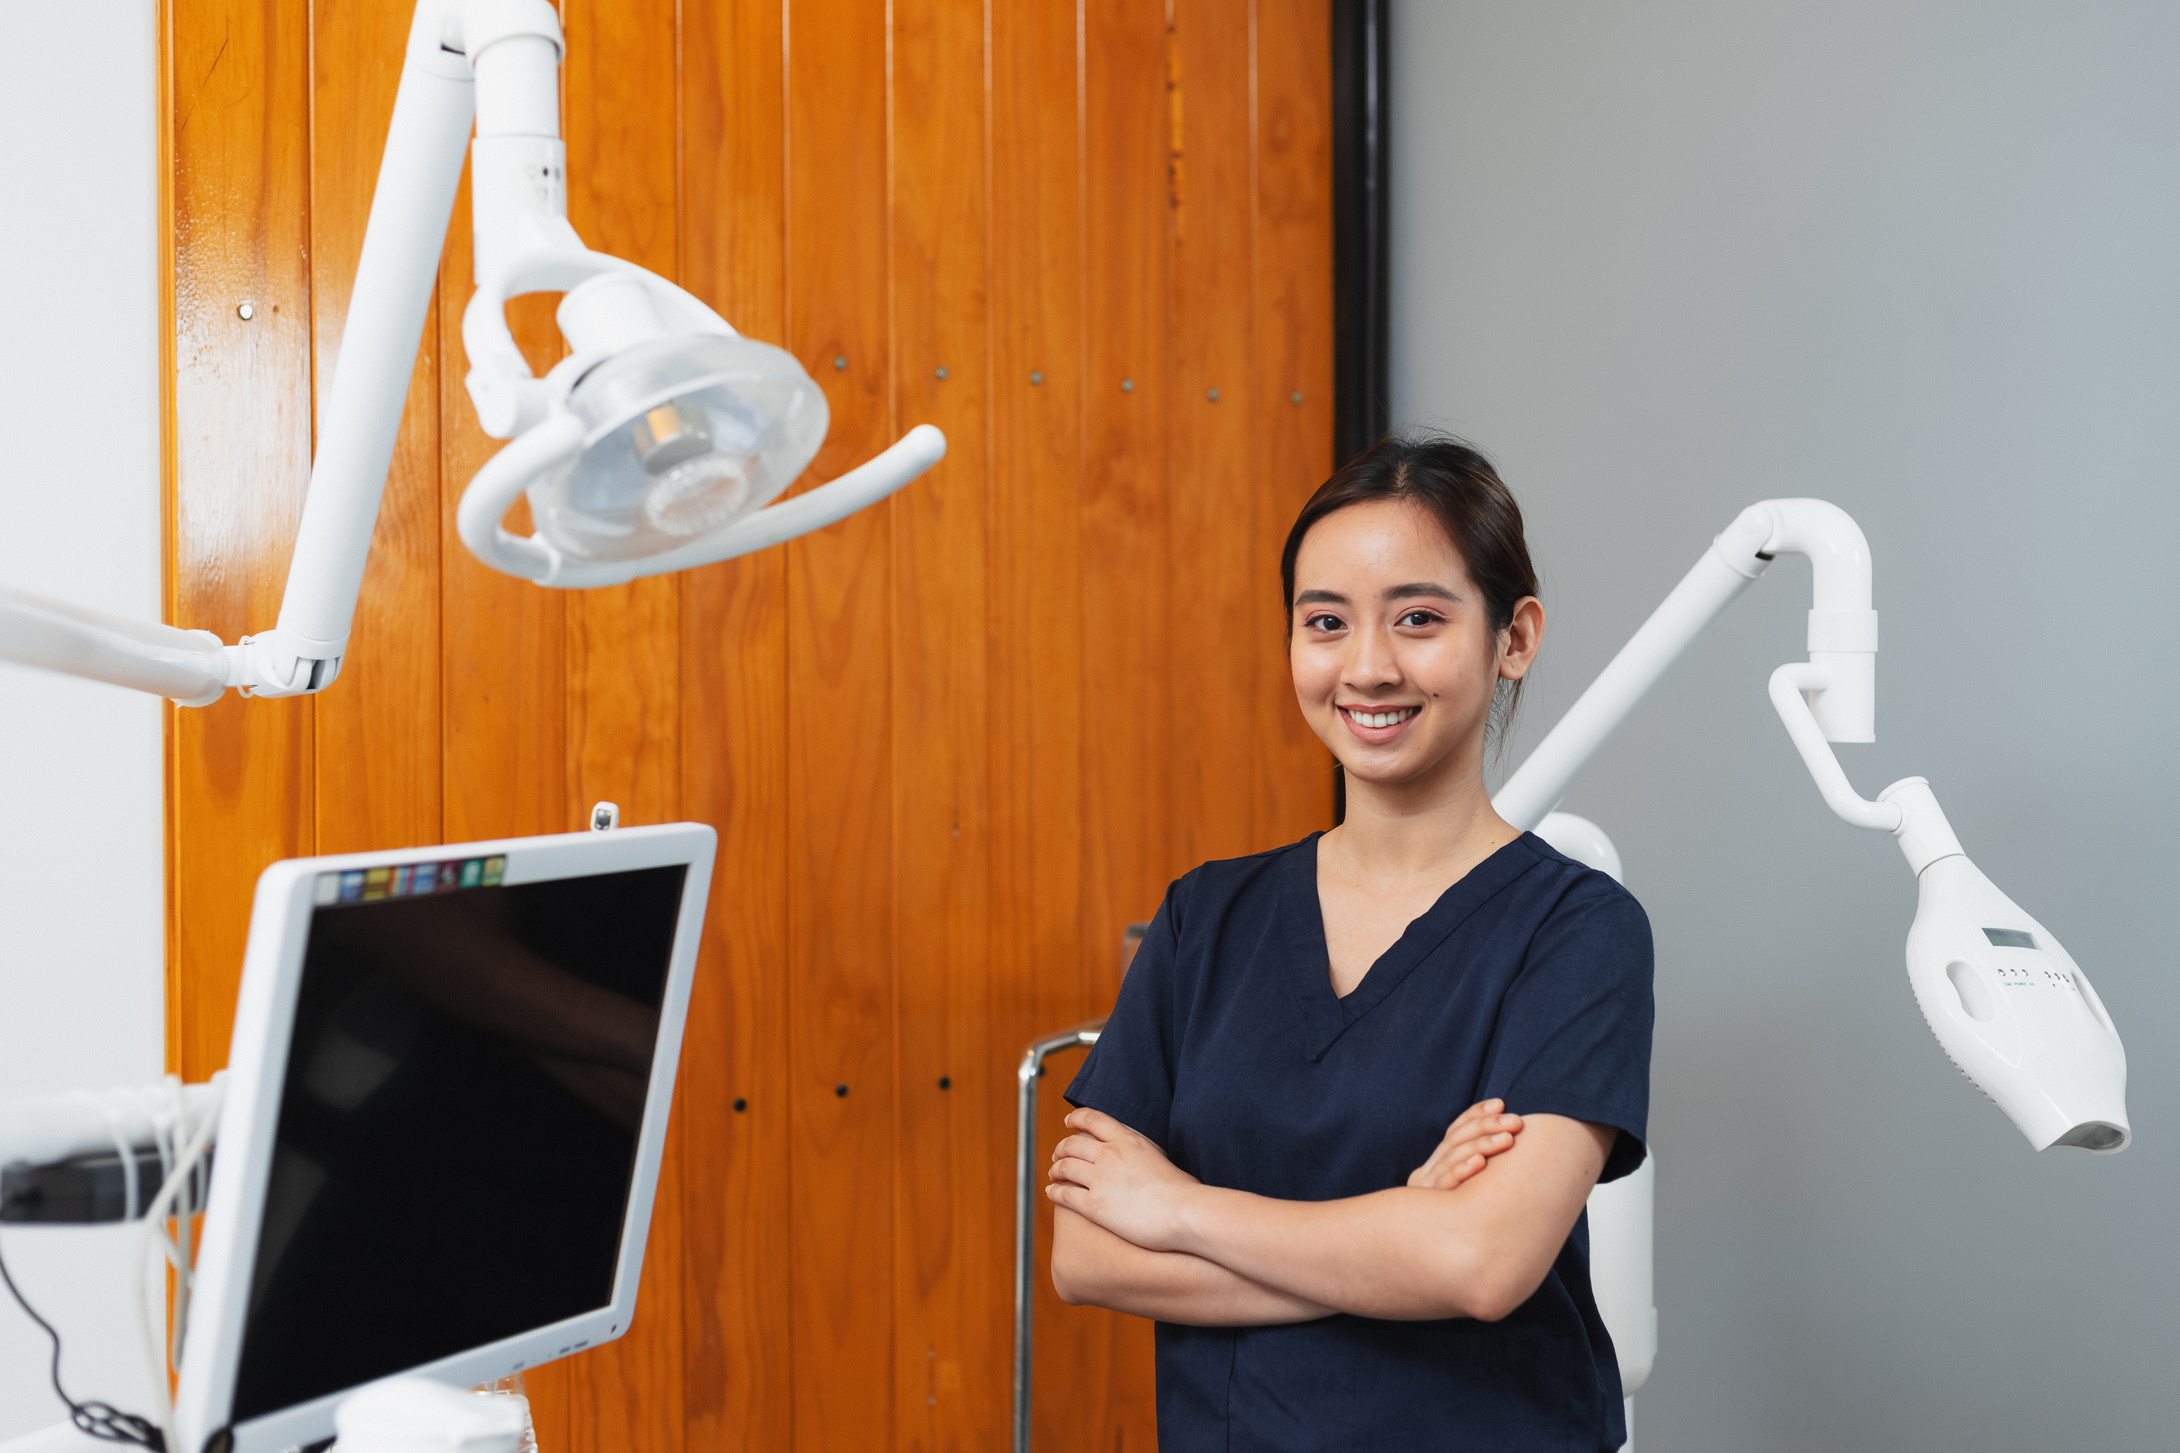 Female Dentist in Clinic